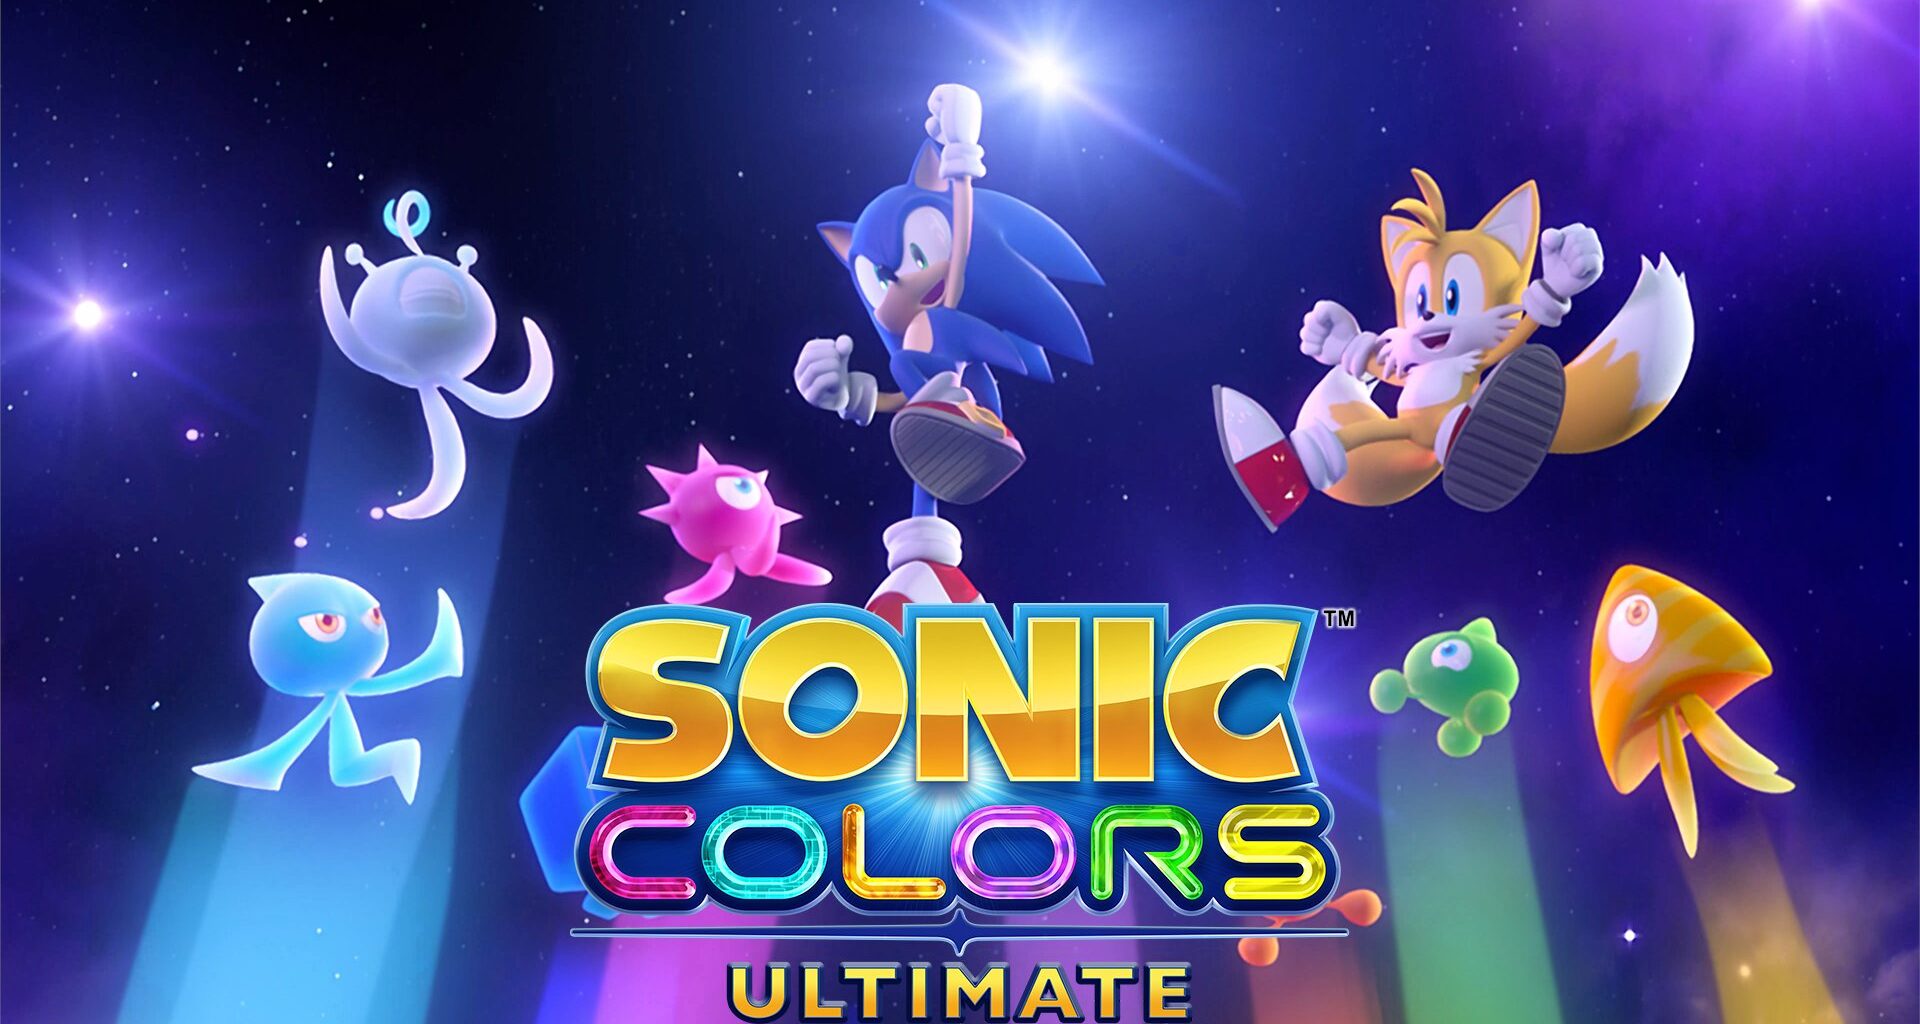 Sonic colors ultimate chega em 7 de setembro